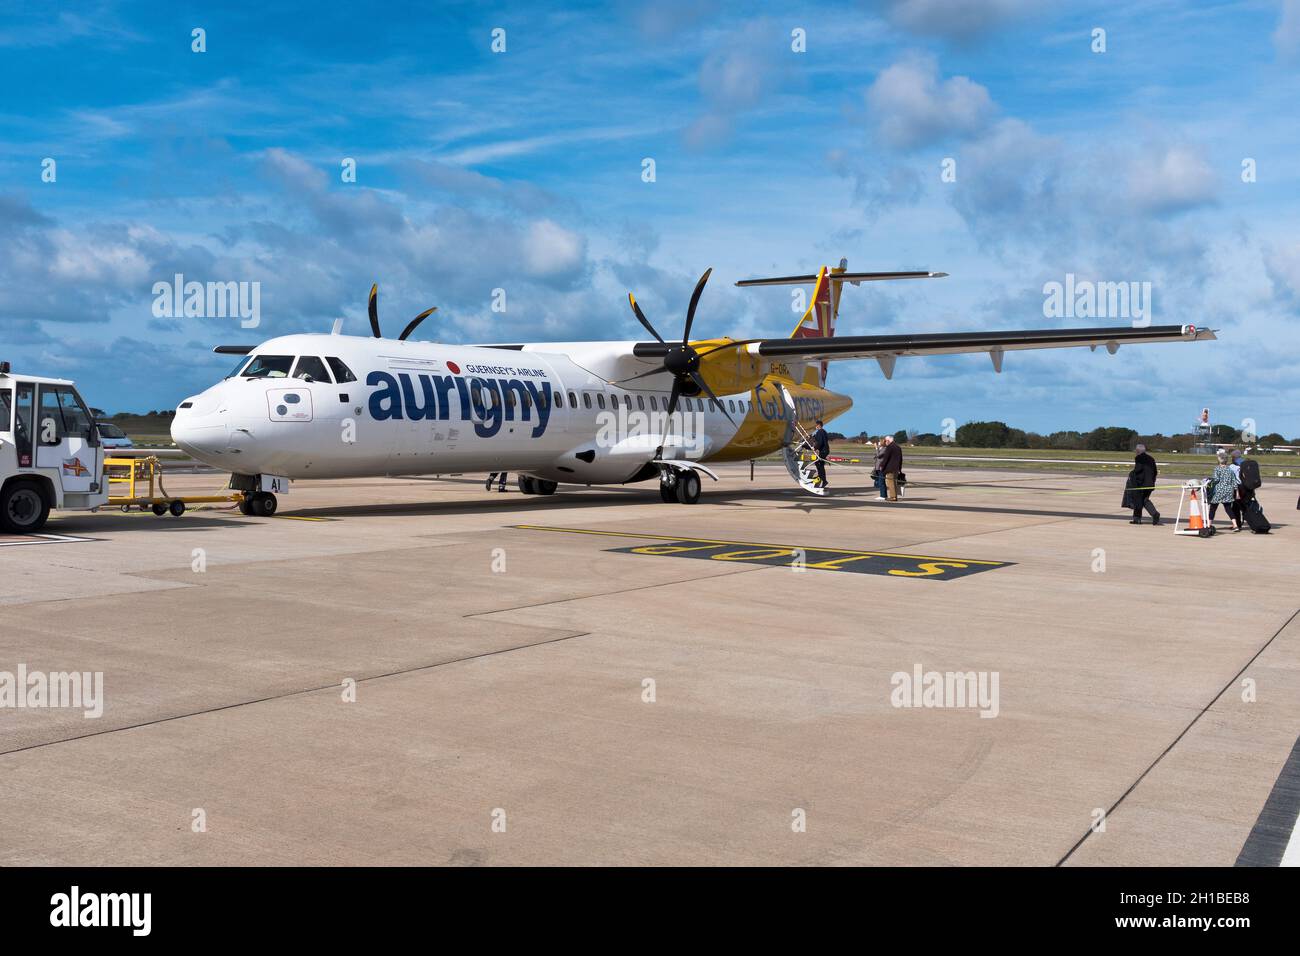 dh Aurigny ATR 72 212 AEROPORTO GUERNSEY persone viaggiatori imbarco aereo aereo aereo servizi aerei turboprop aereo ATR 72-212A passeggeri aerei 212a Foto Stock